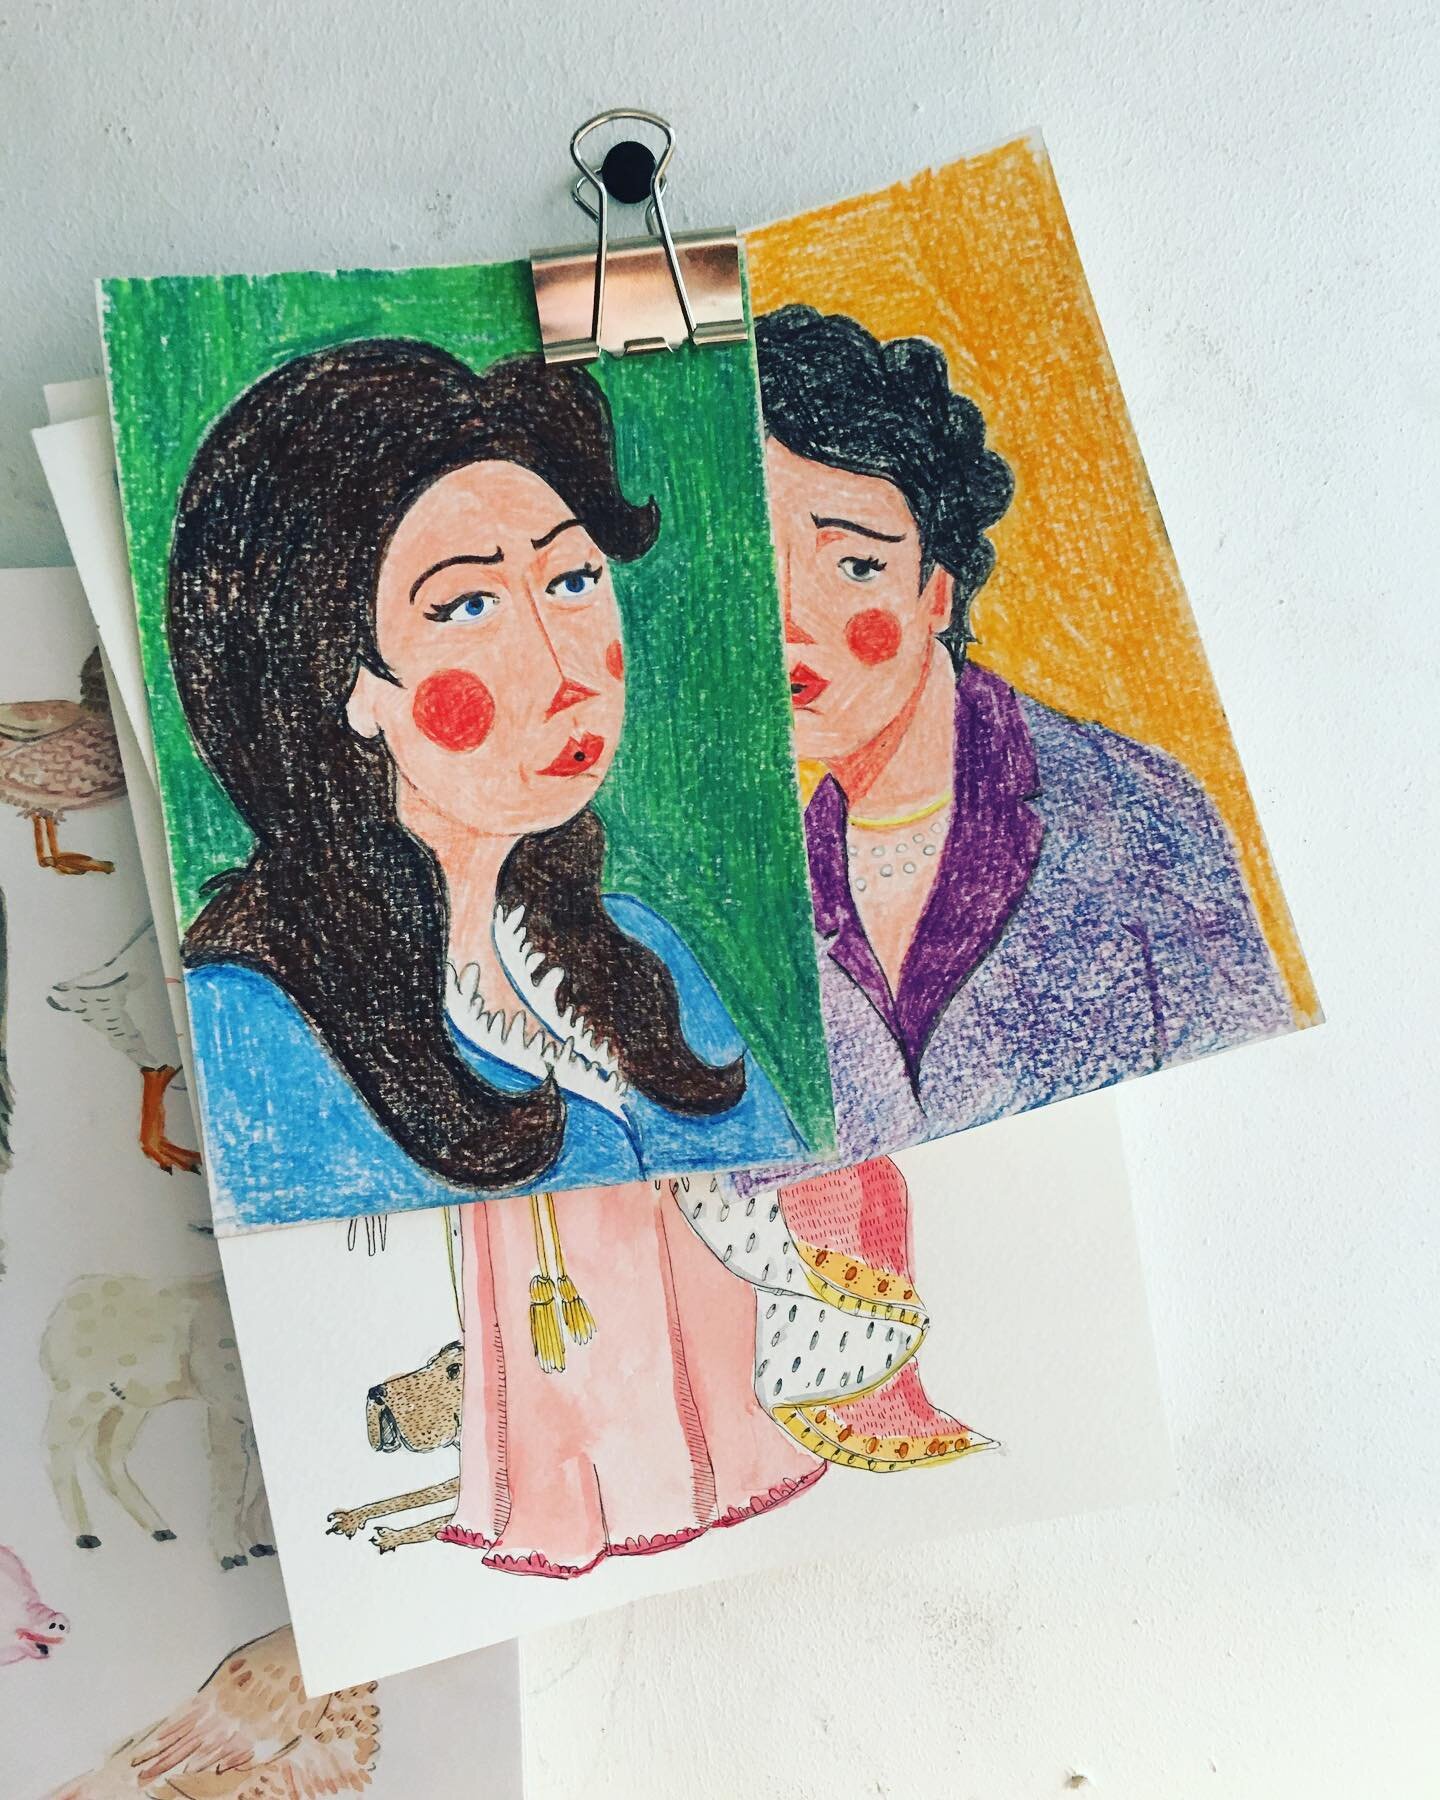 Mini Coloured Pencil Portraits
Loretta Lynn + Edith Piaf

.
.
.

#draw #drawing #pencildrawing #painting #portrait #portraitpainting #singer #lorettalynn #pencilportrait #art #design #illustration #artist #designer #illustrator #print #illustrationof